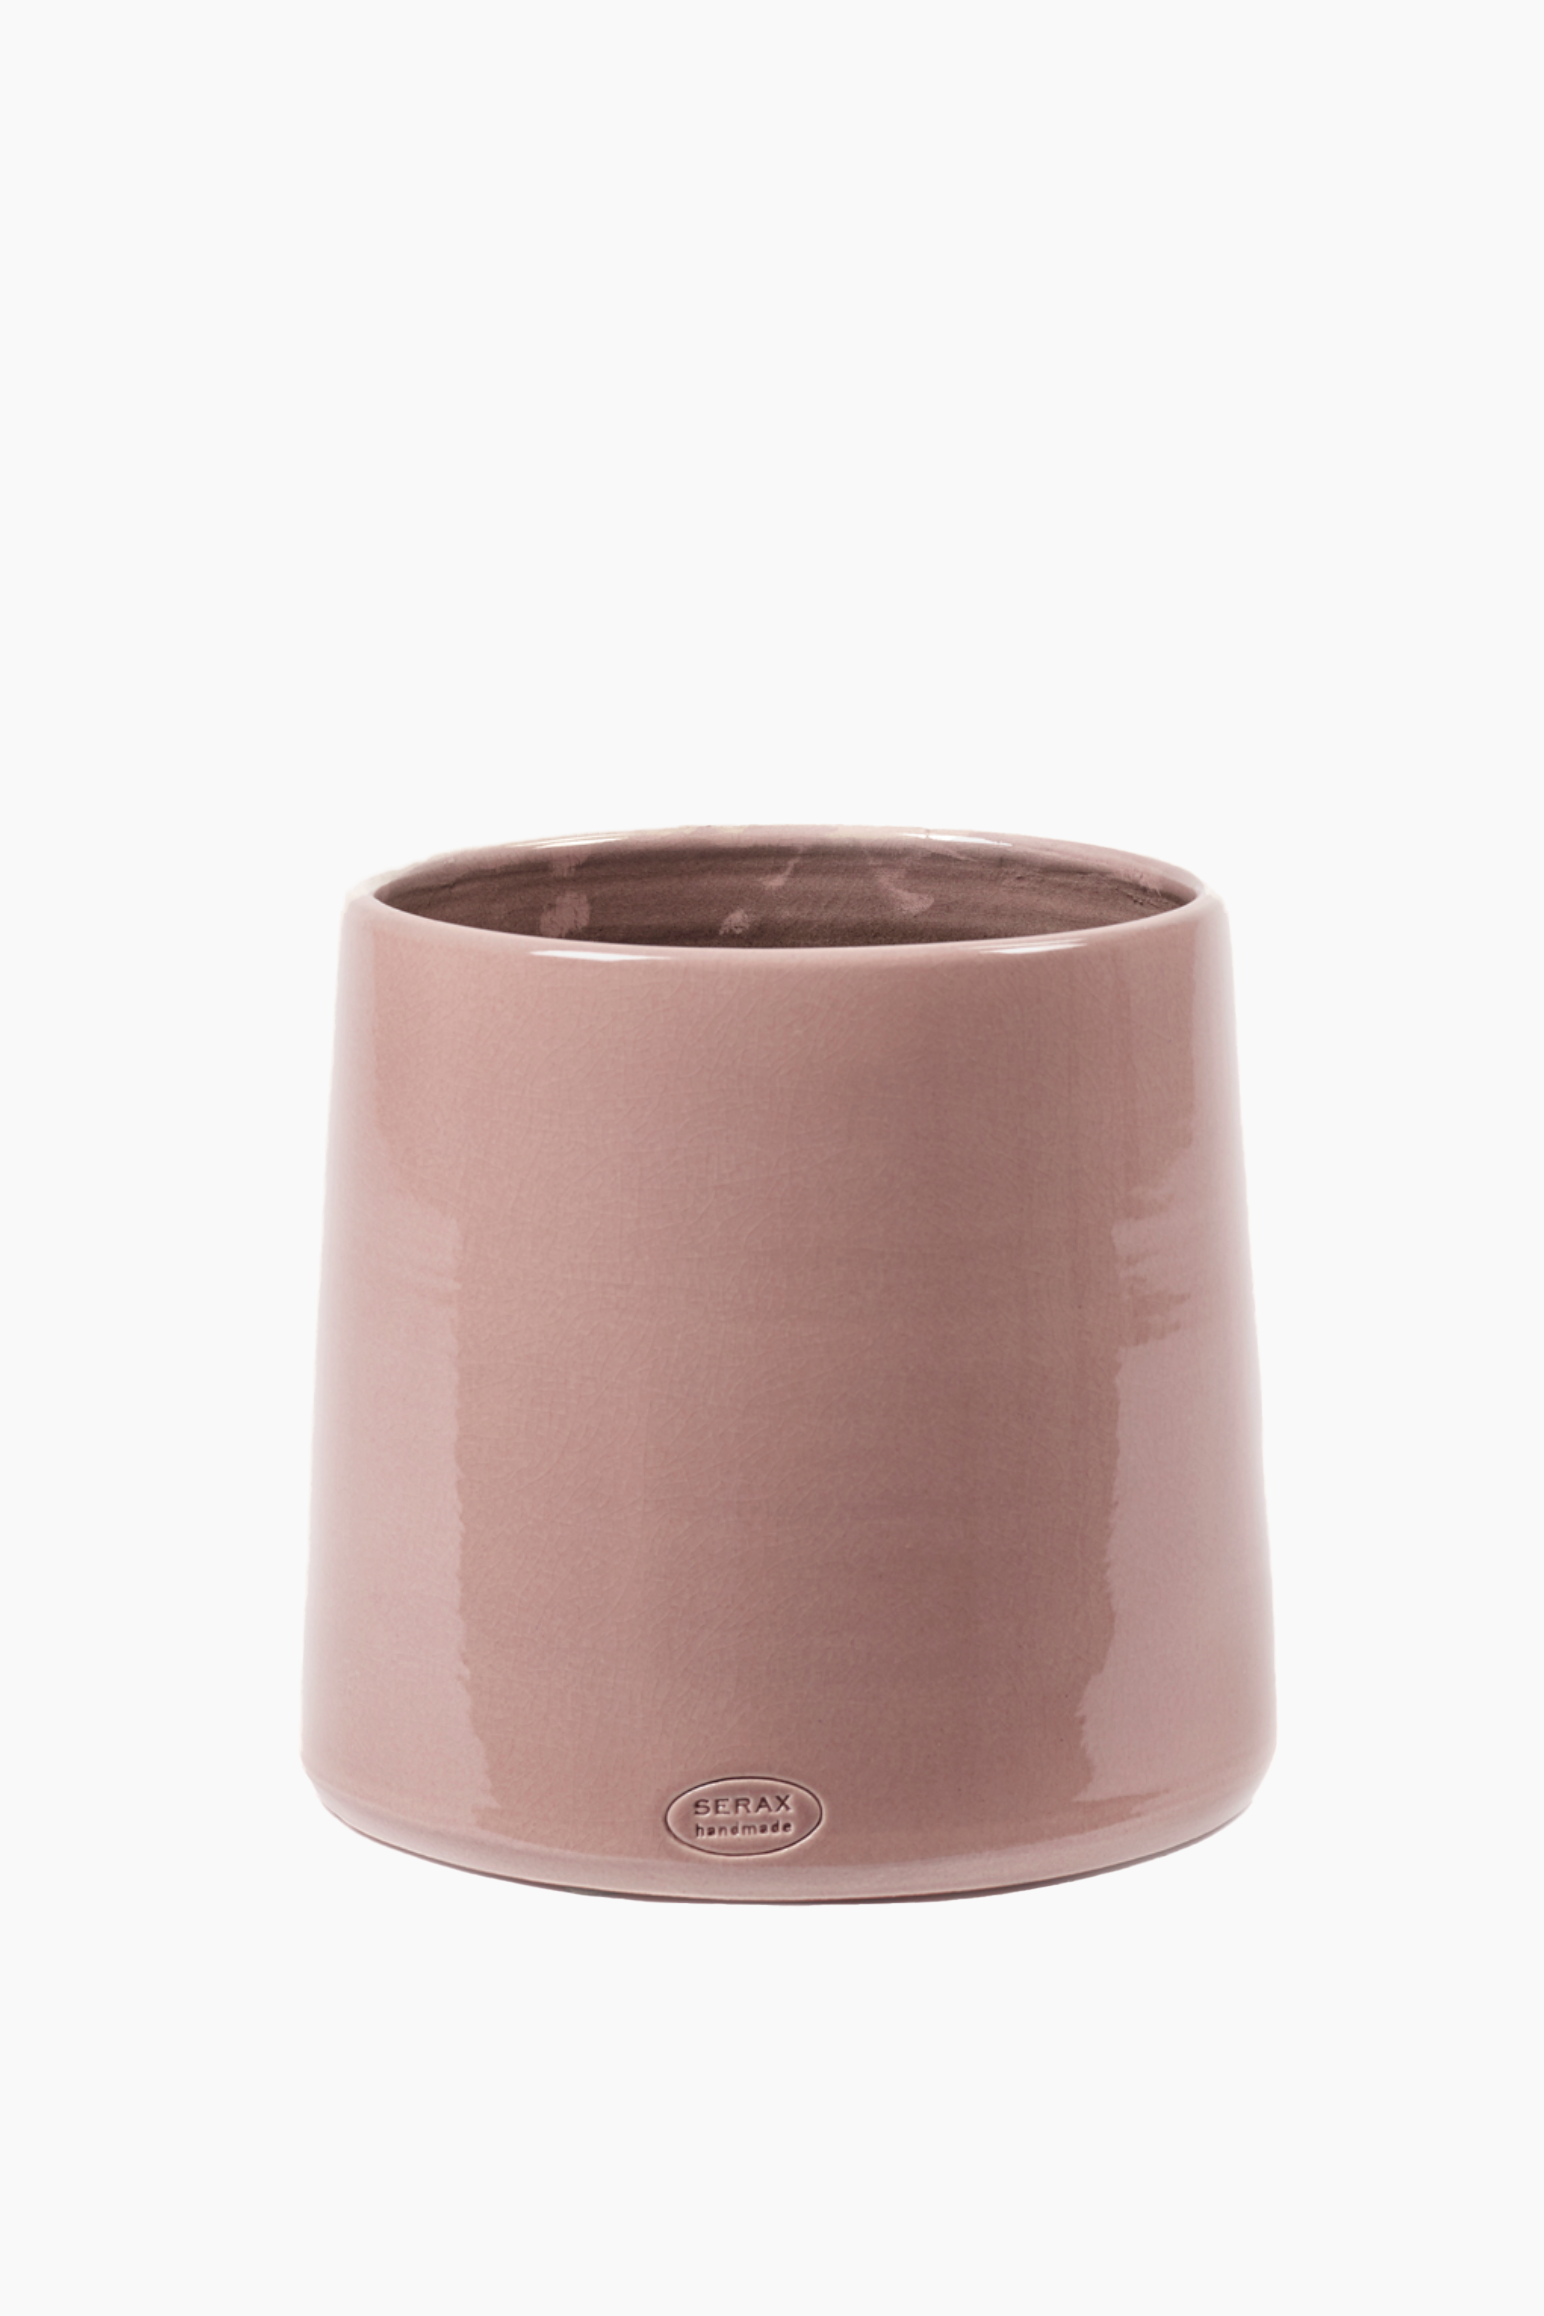 Cone flowerpot pink-Serax-KIOSK48TH